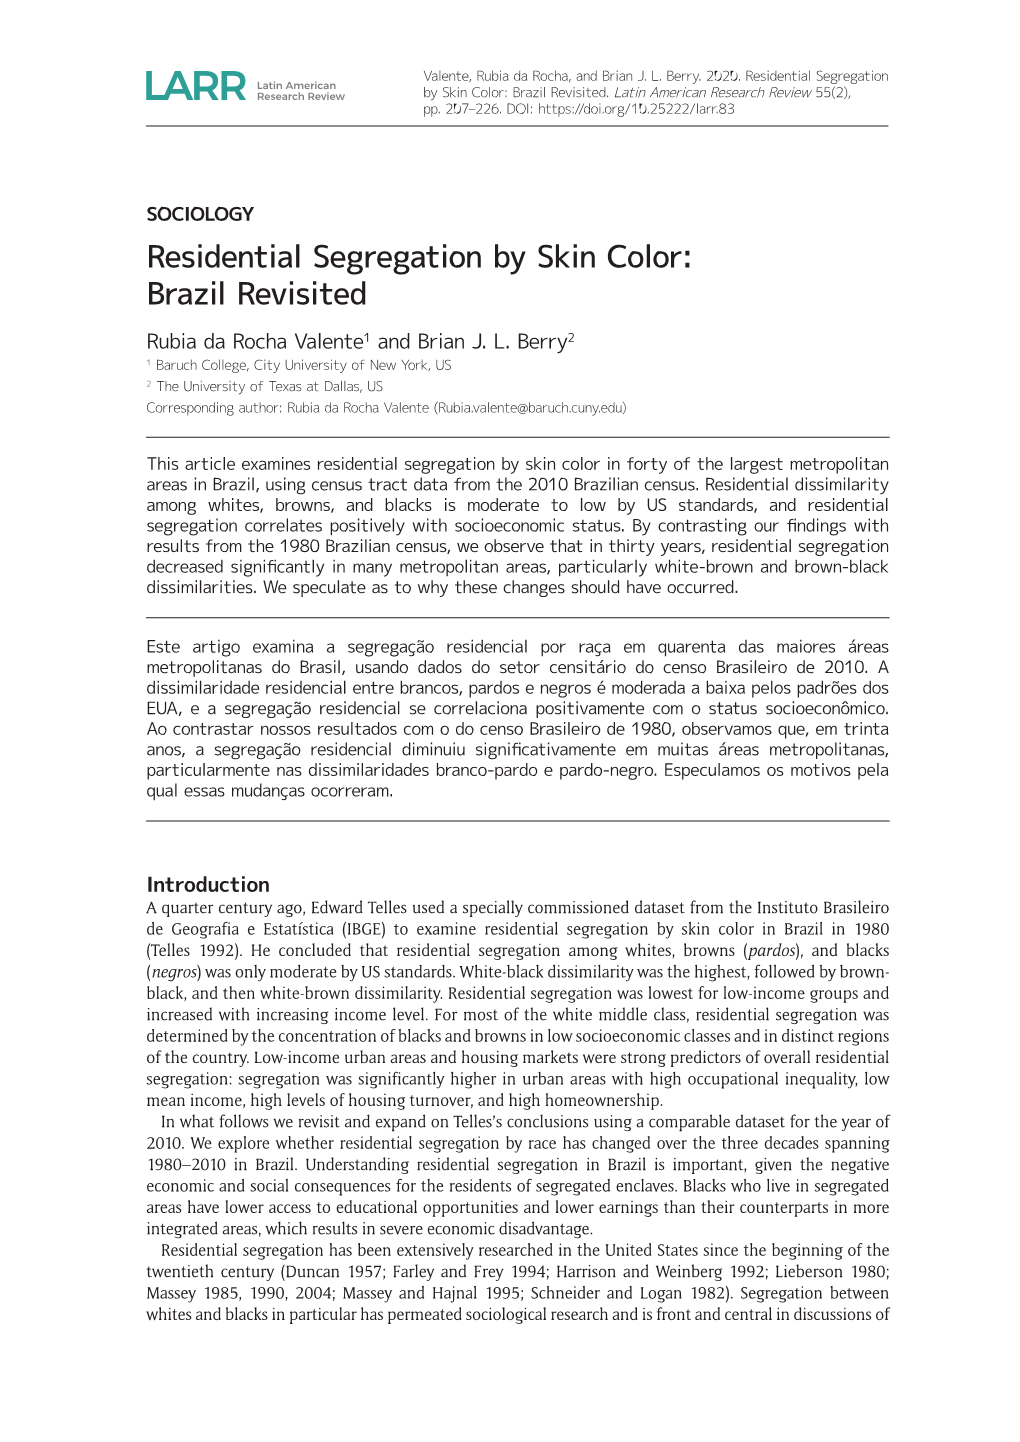 Residential Segregation by Skin Color: Brazil Revisited